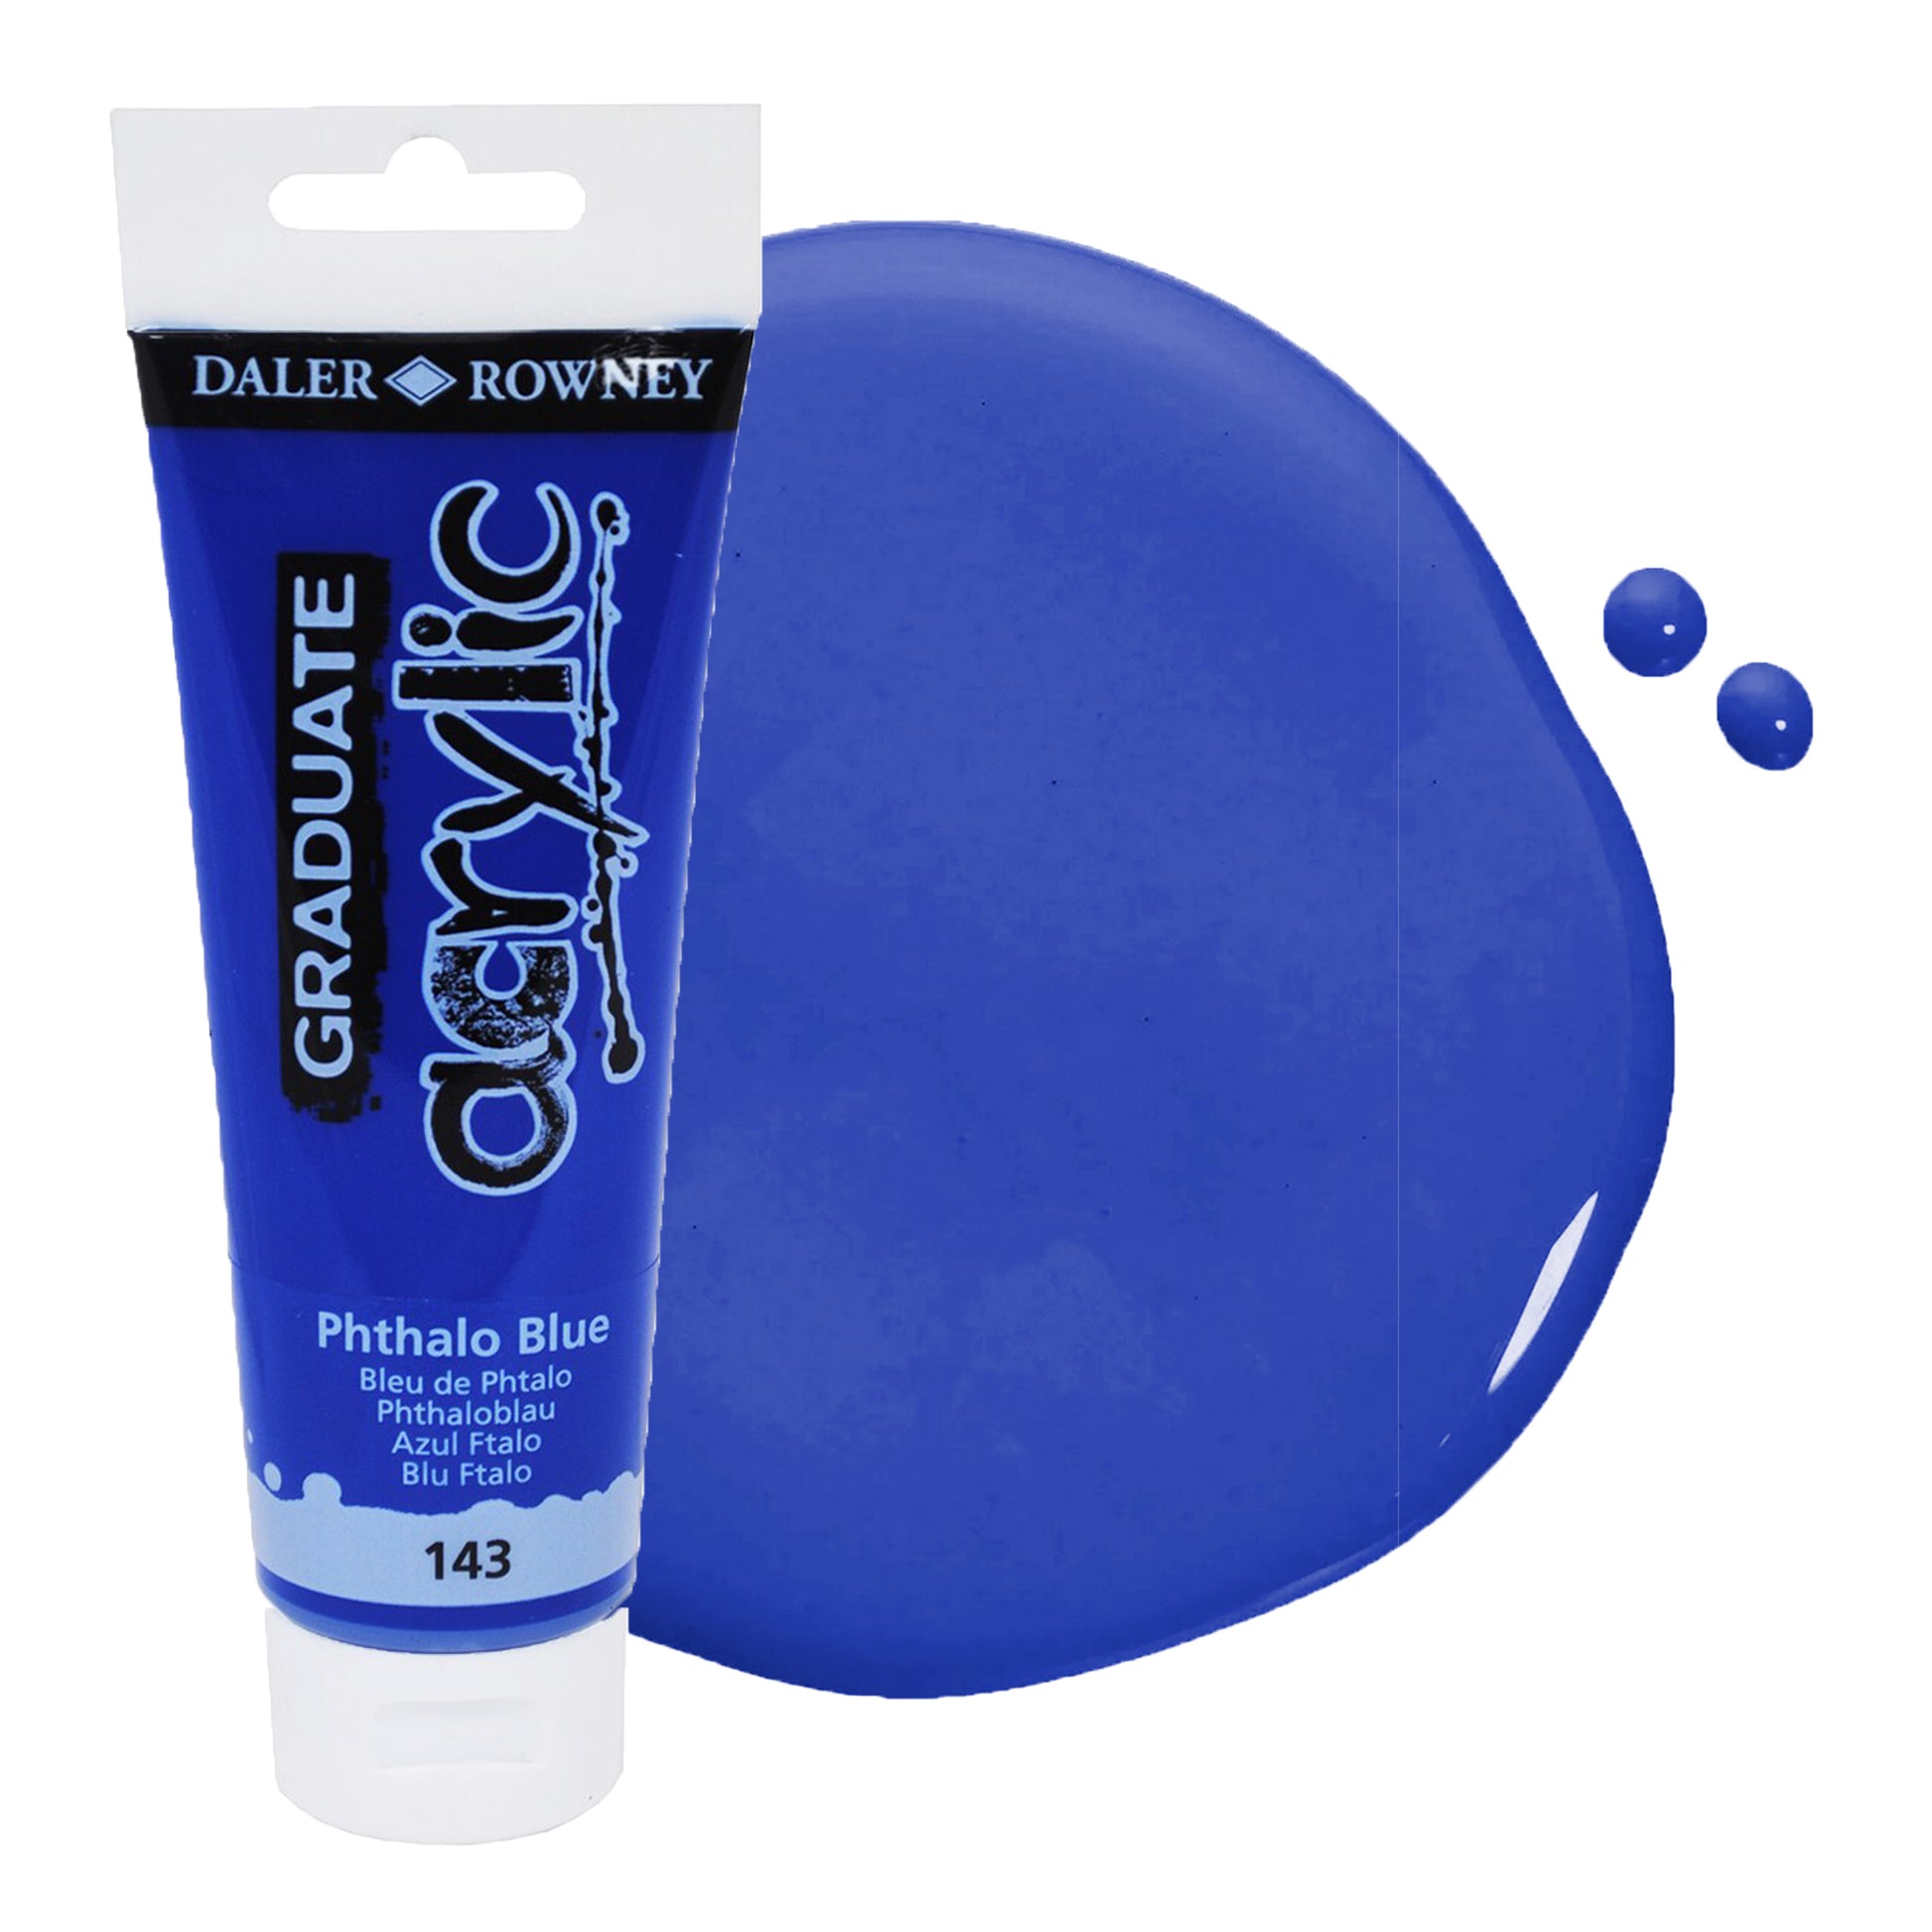 Daler & Rowney beginner's deep blue acrylic paint tube